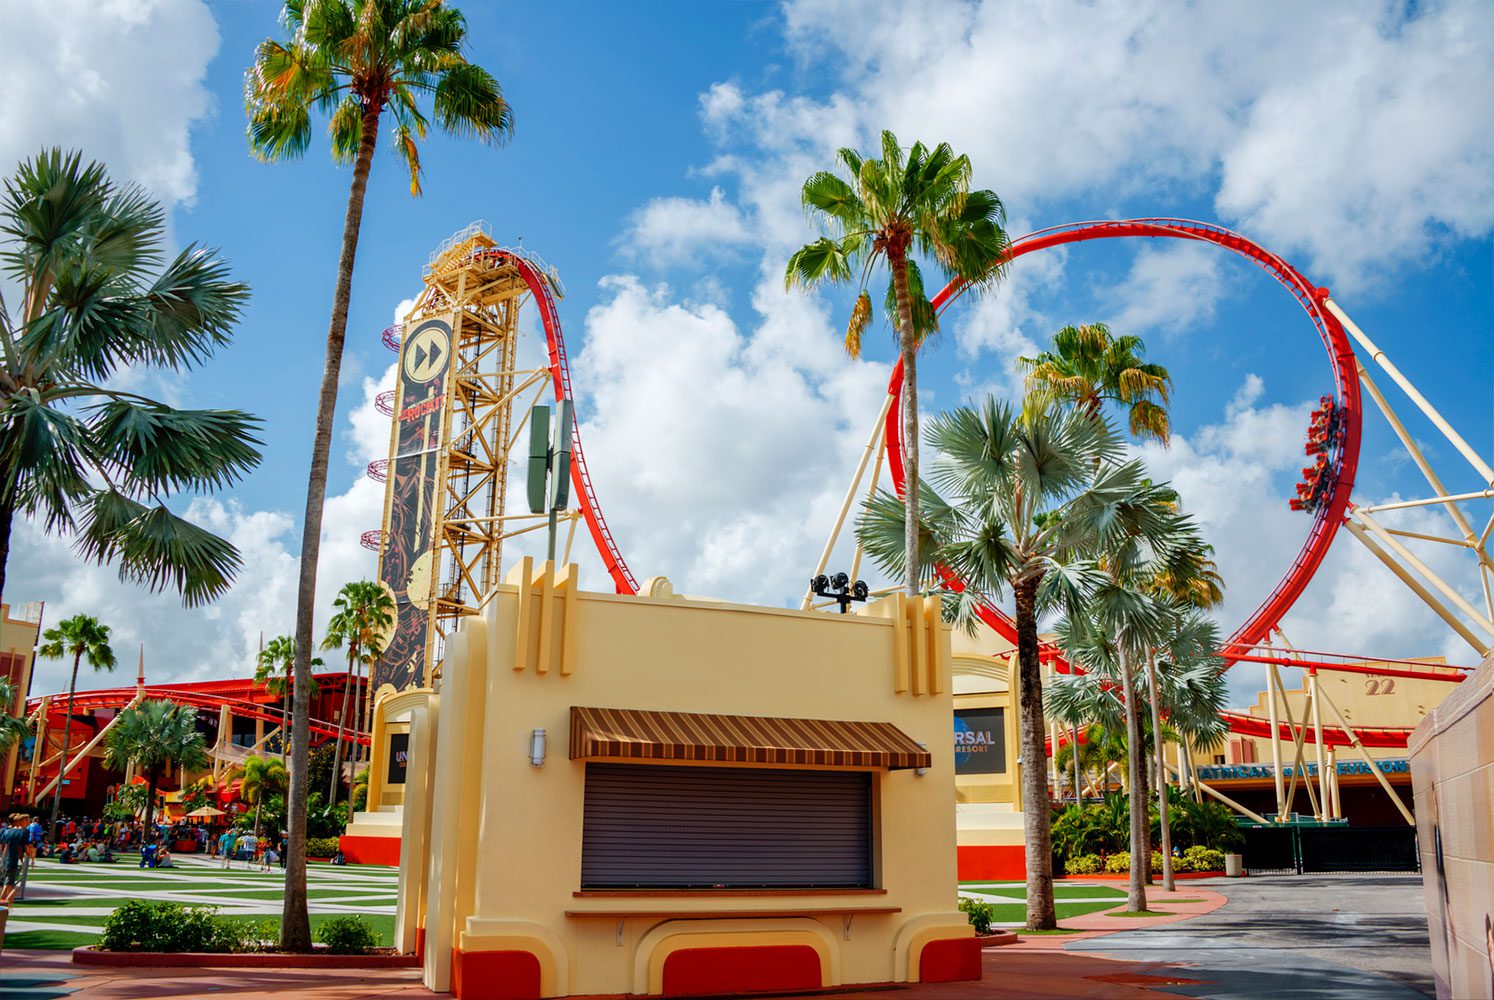 Red/yellow Rip Ride coaster at Universal